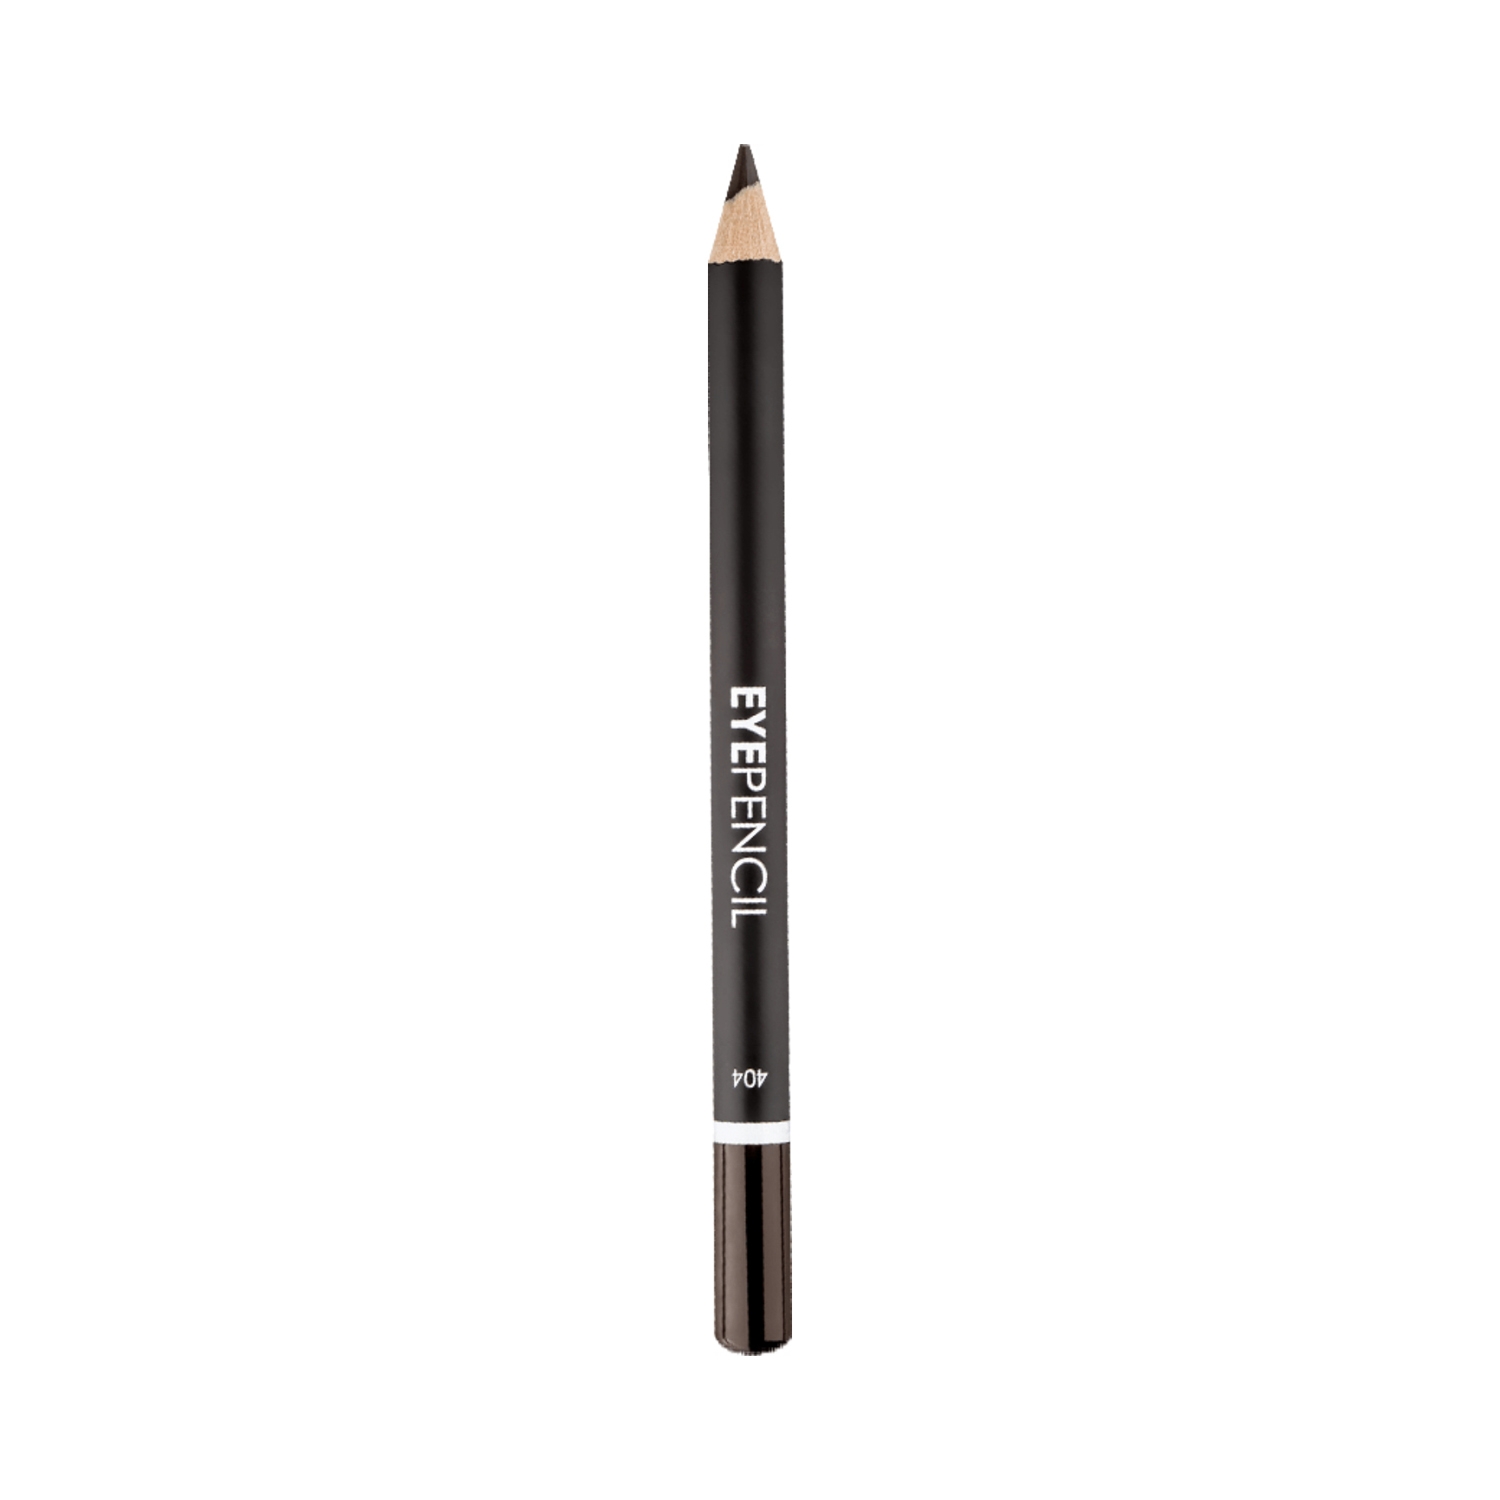 Lamel | Lamel Eye Pencil - N 404 Dark Brown (1.7g)